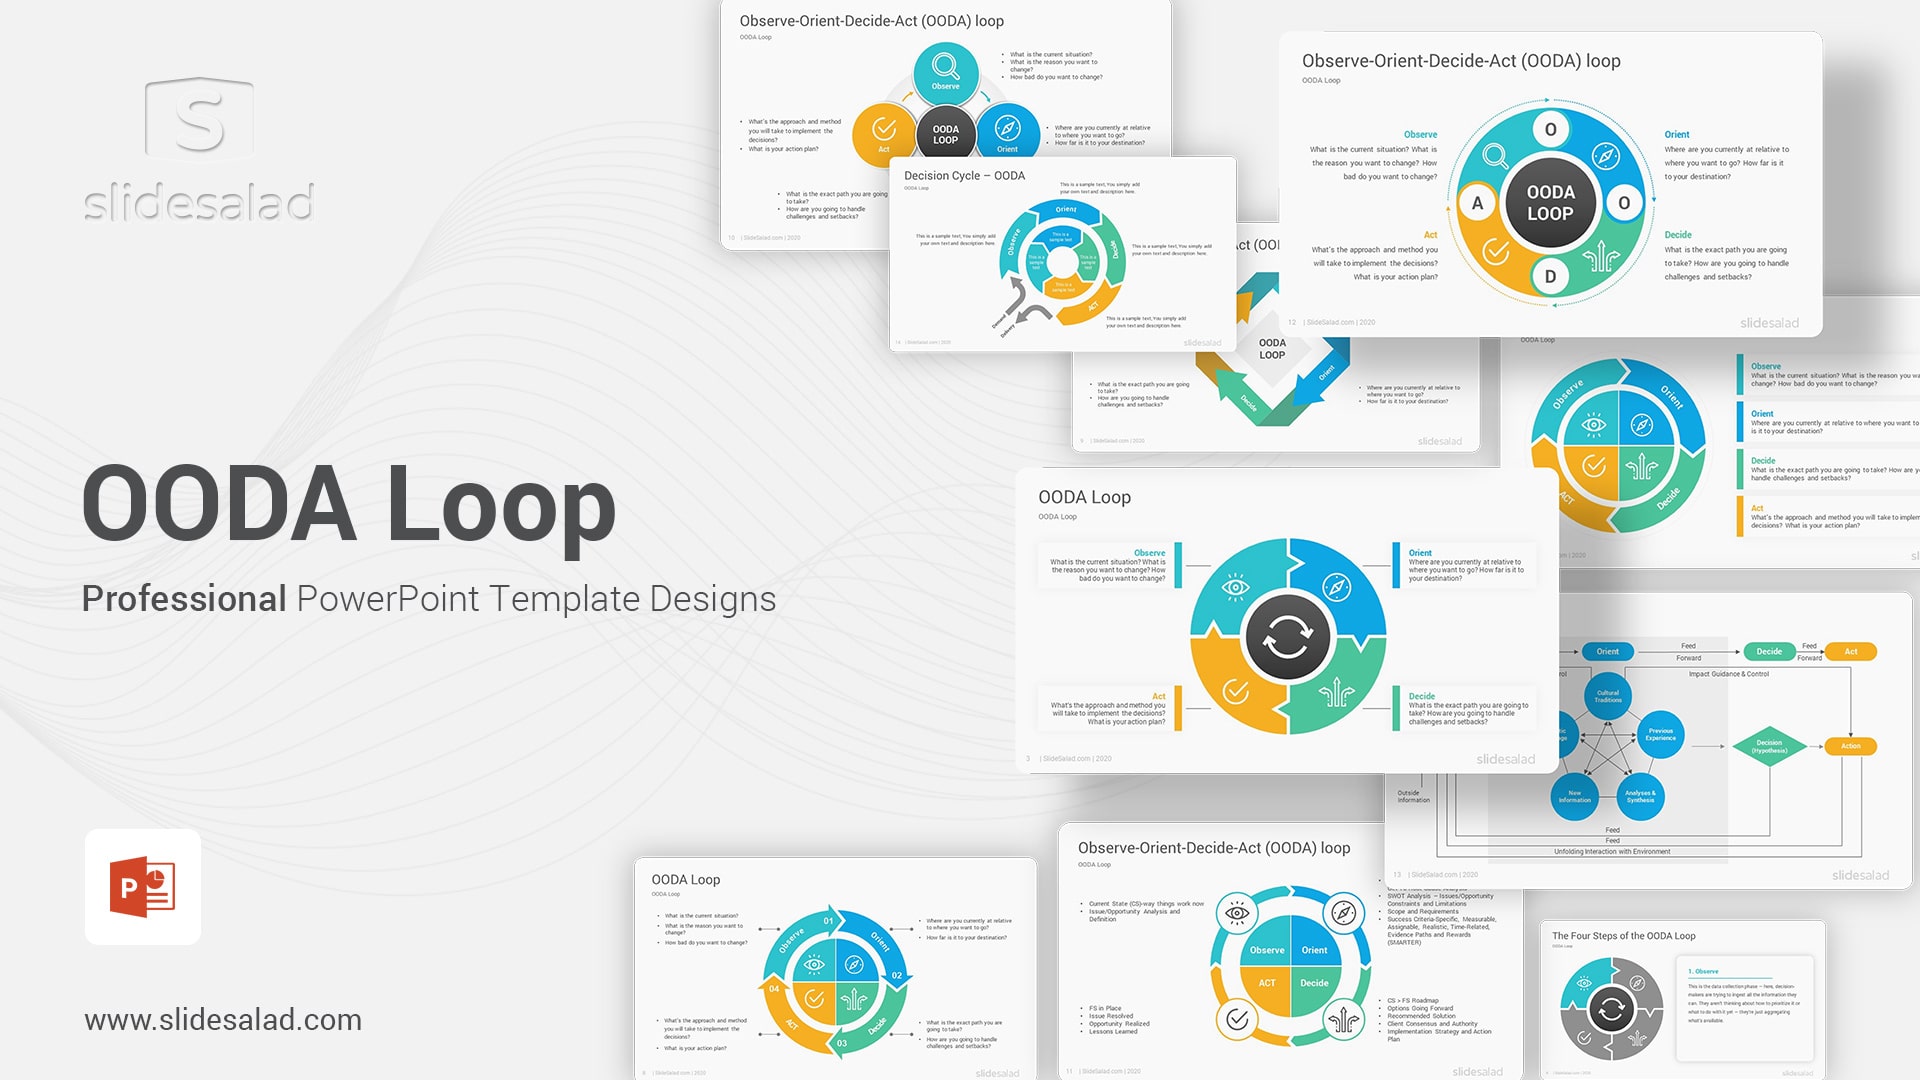 OODA Loop PowerPoint Template Diagrams - Comprehensive Approach to Observe, Orient, Decide, Act Loop